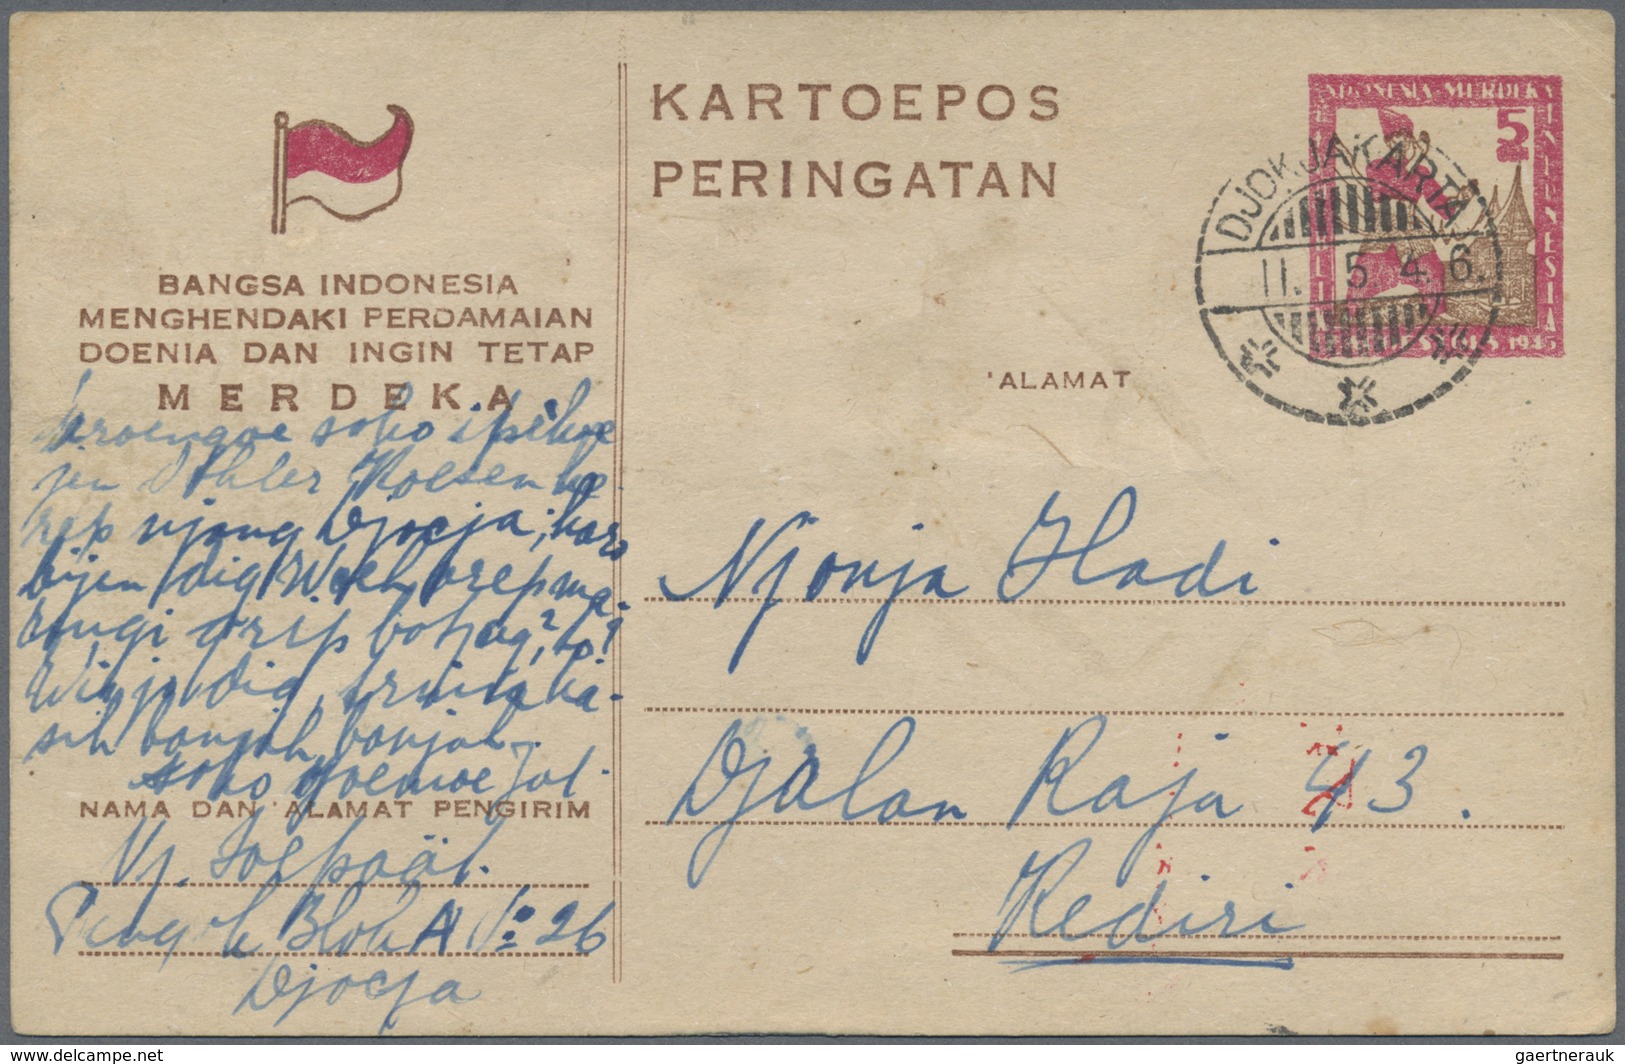 GA Indonesien: 1949/97 (ca.), stationery envelopes (warkat pos / postblad) specialized stock: 10 S. (mi